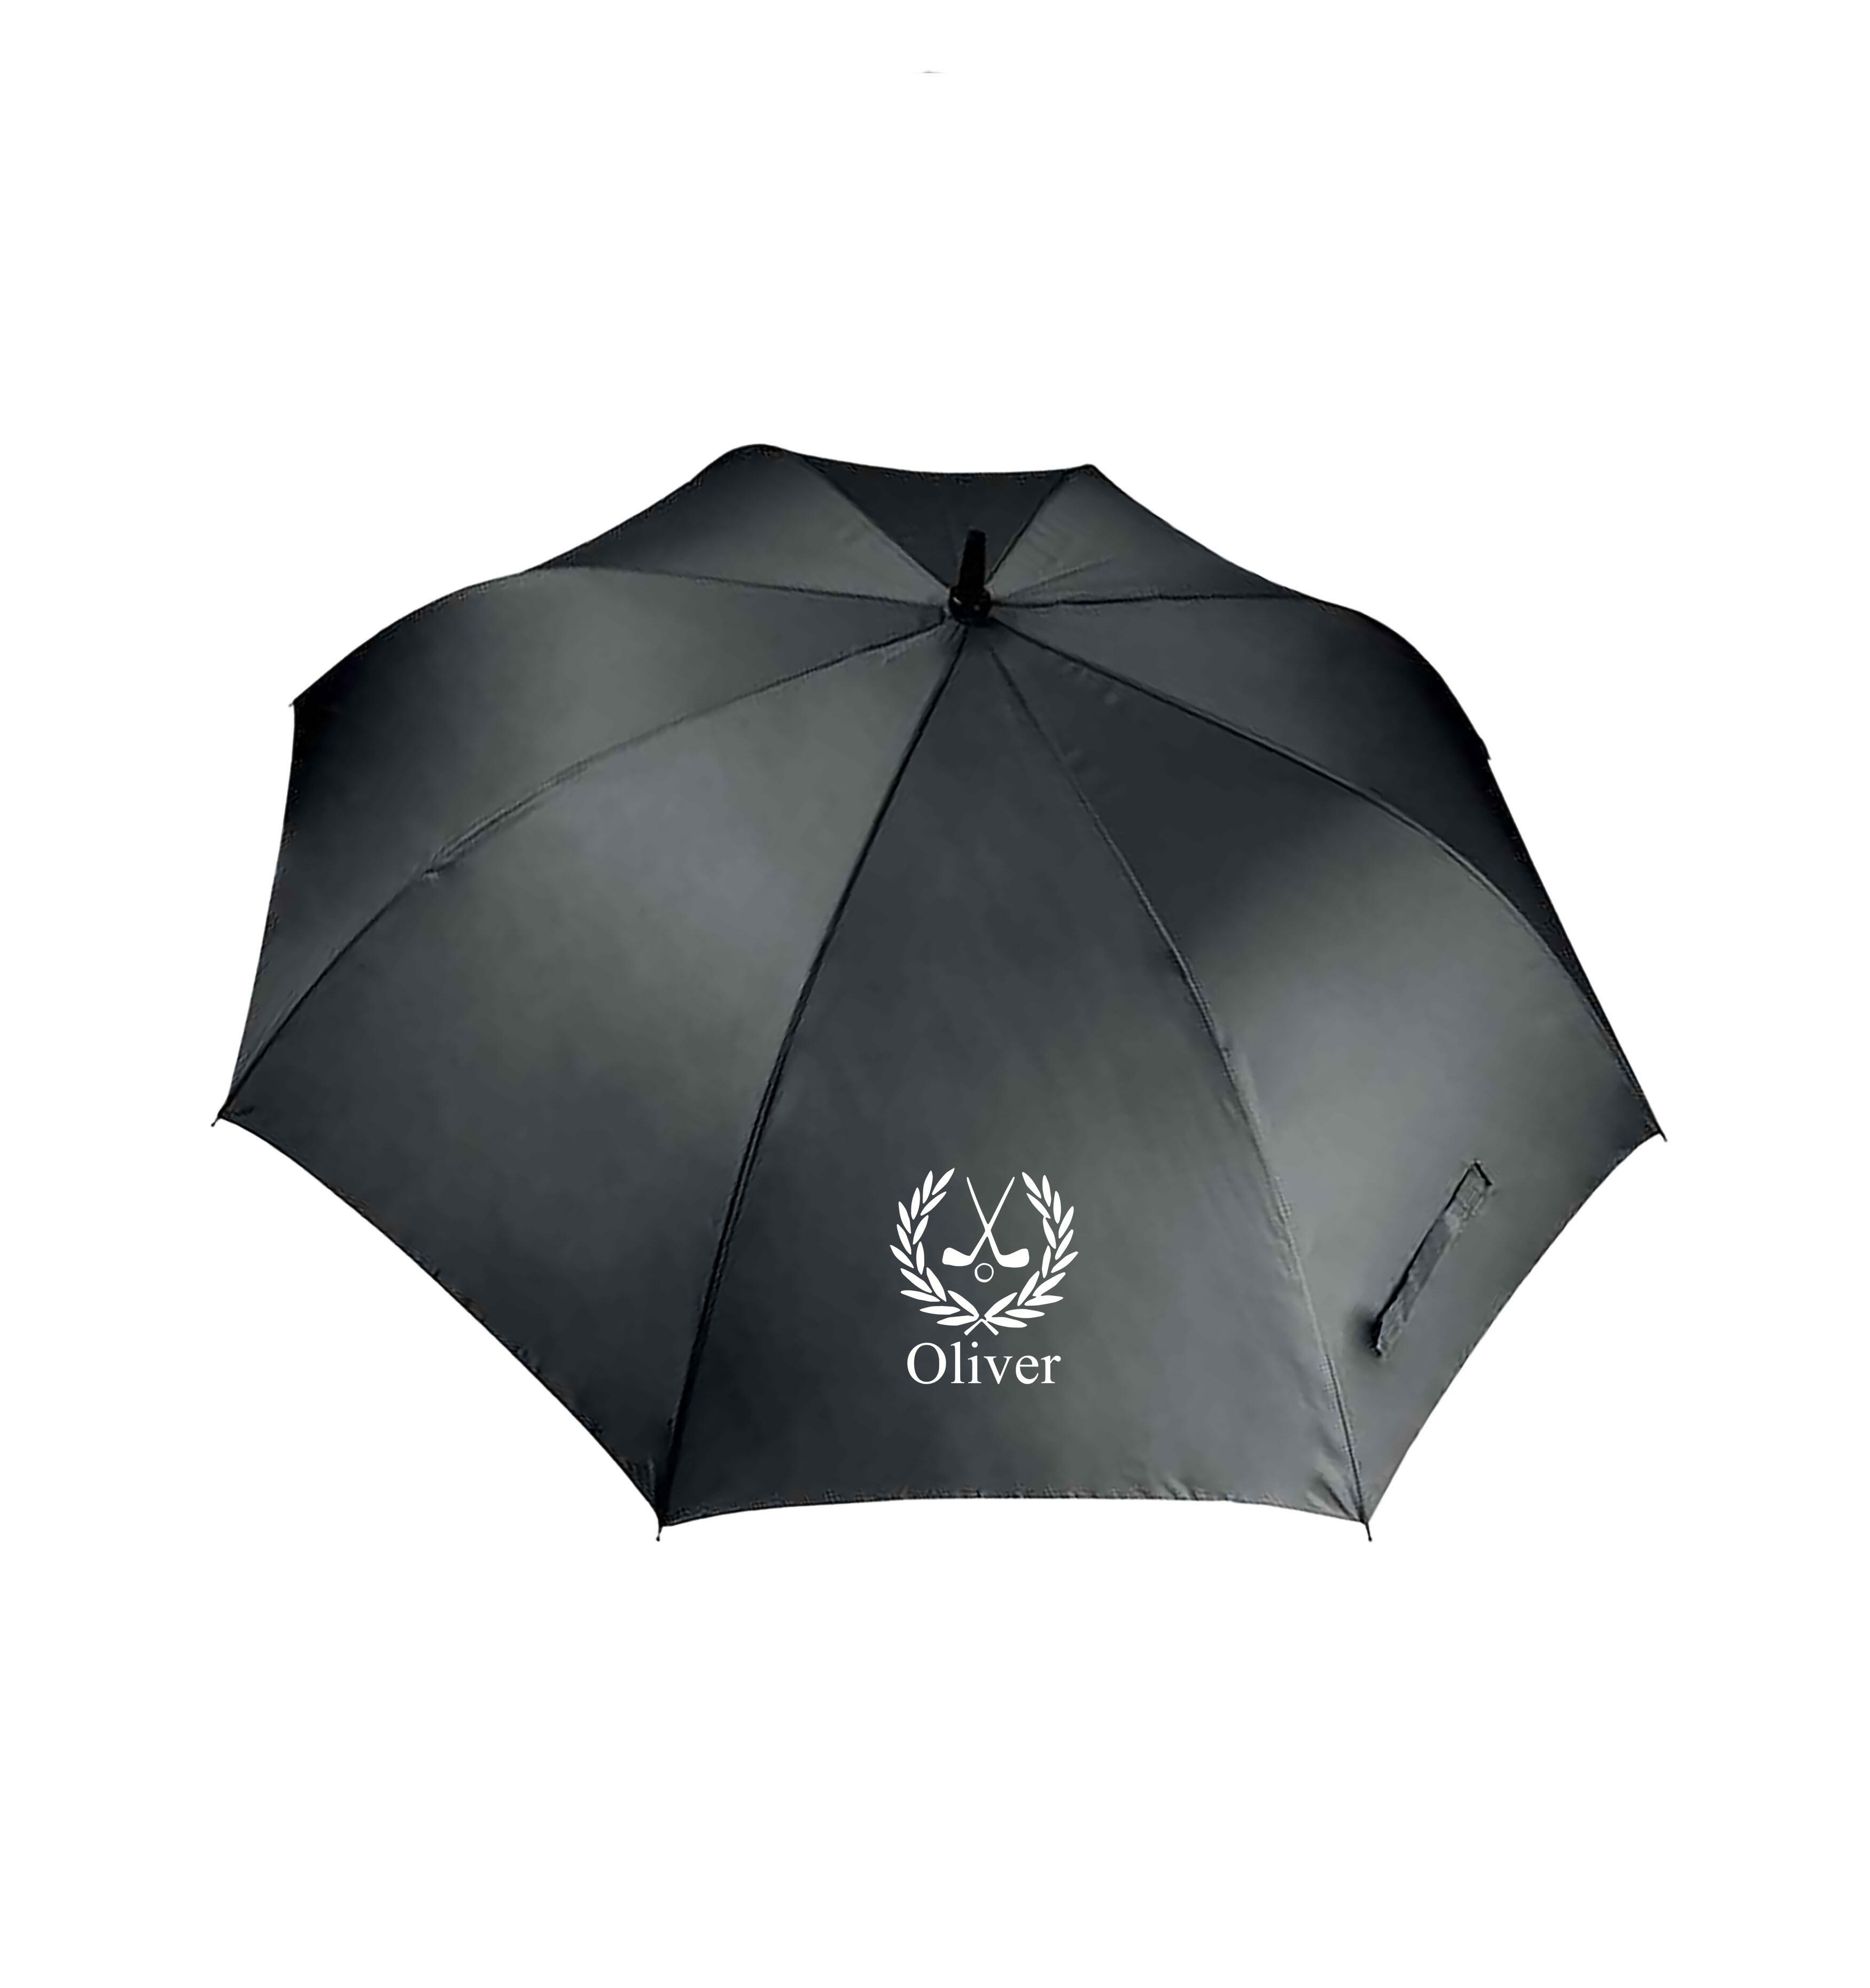 Personalised Large Golf Umbrella Black